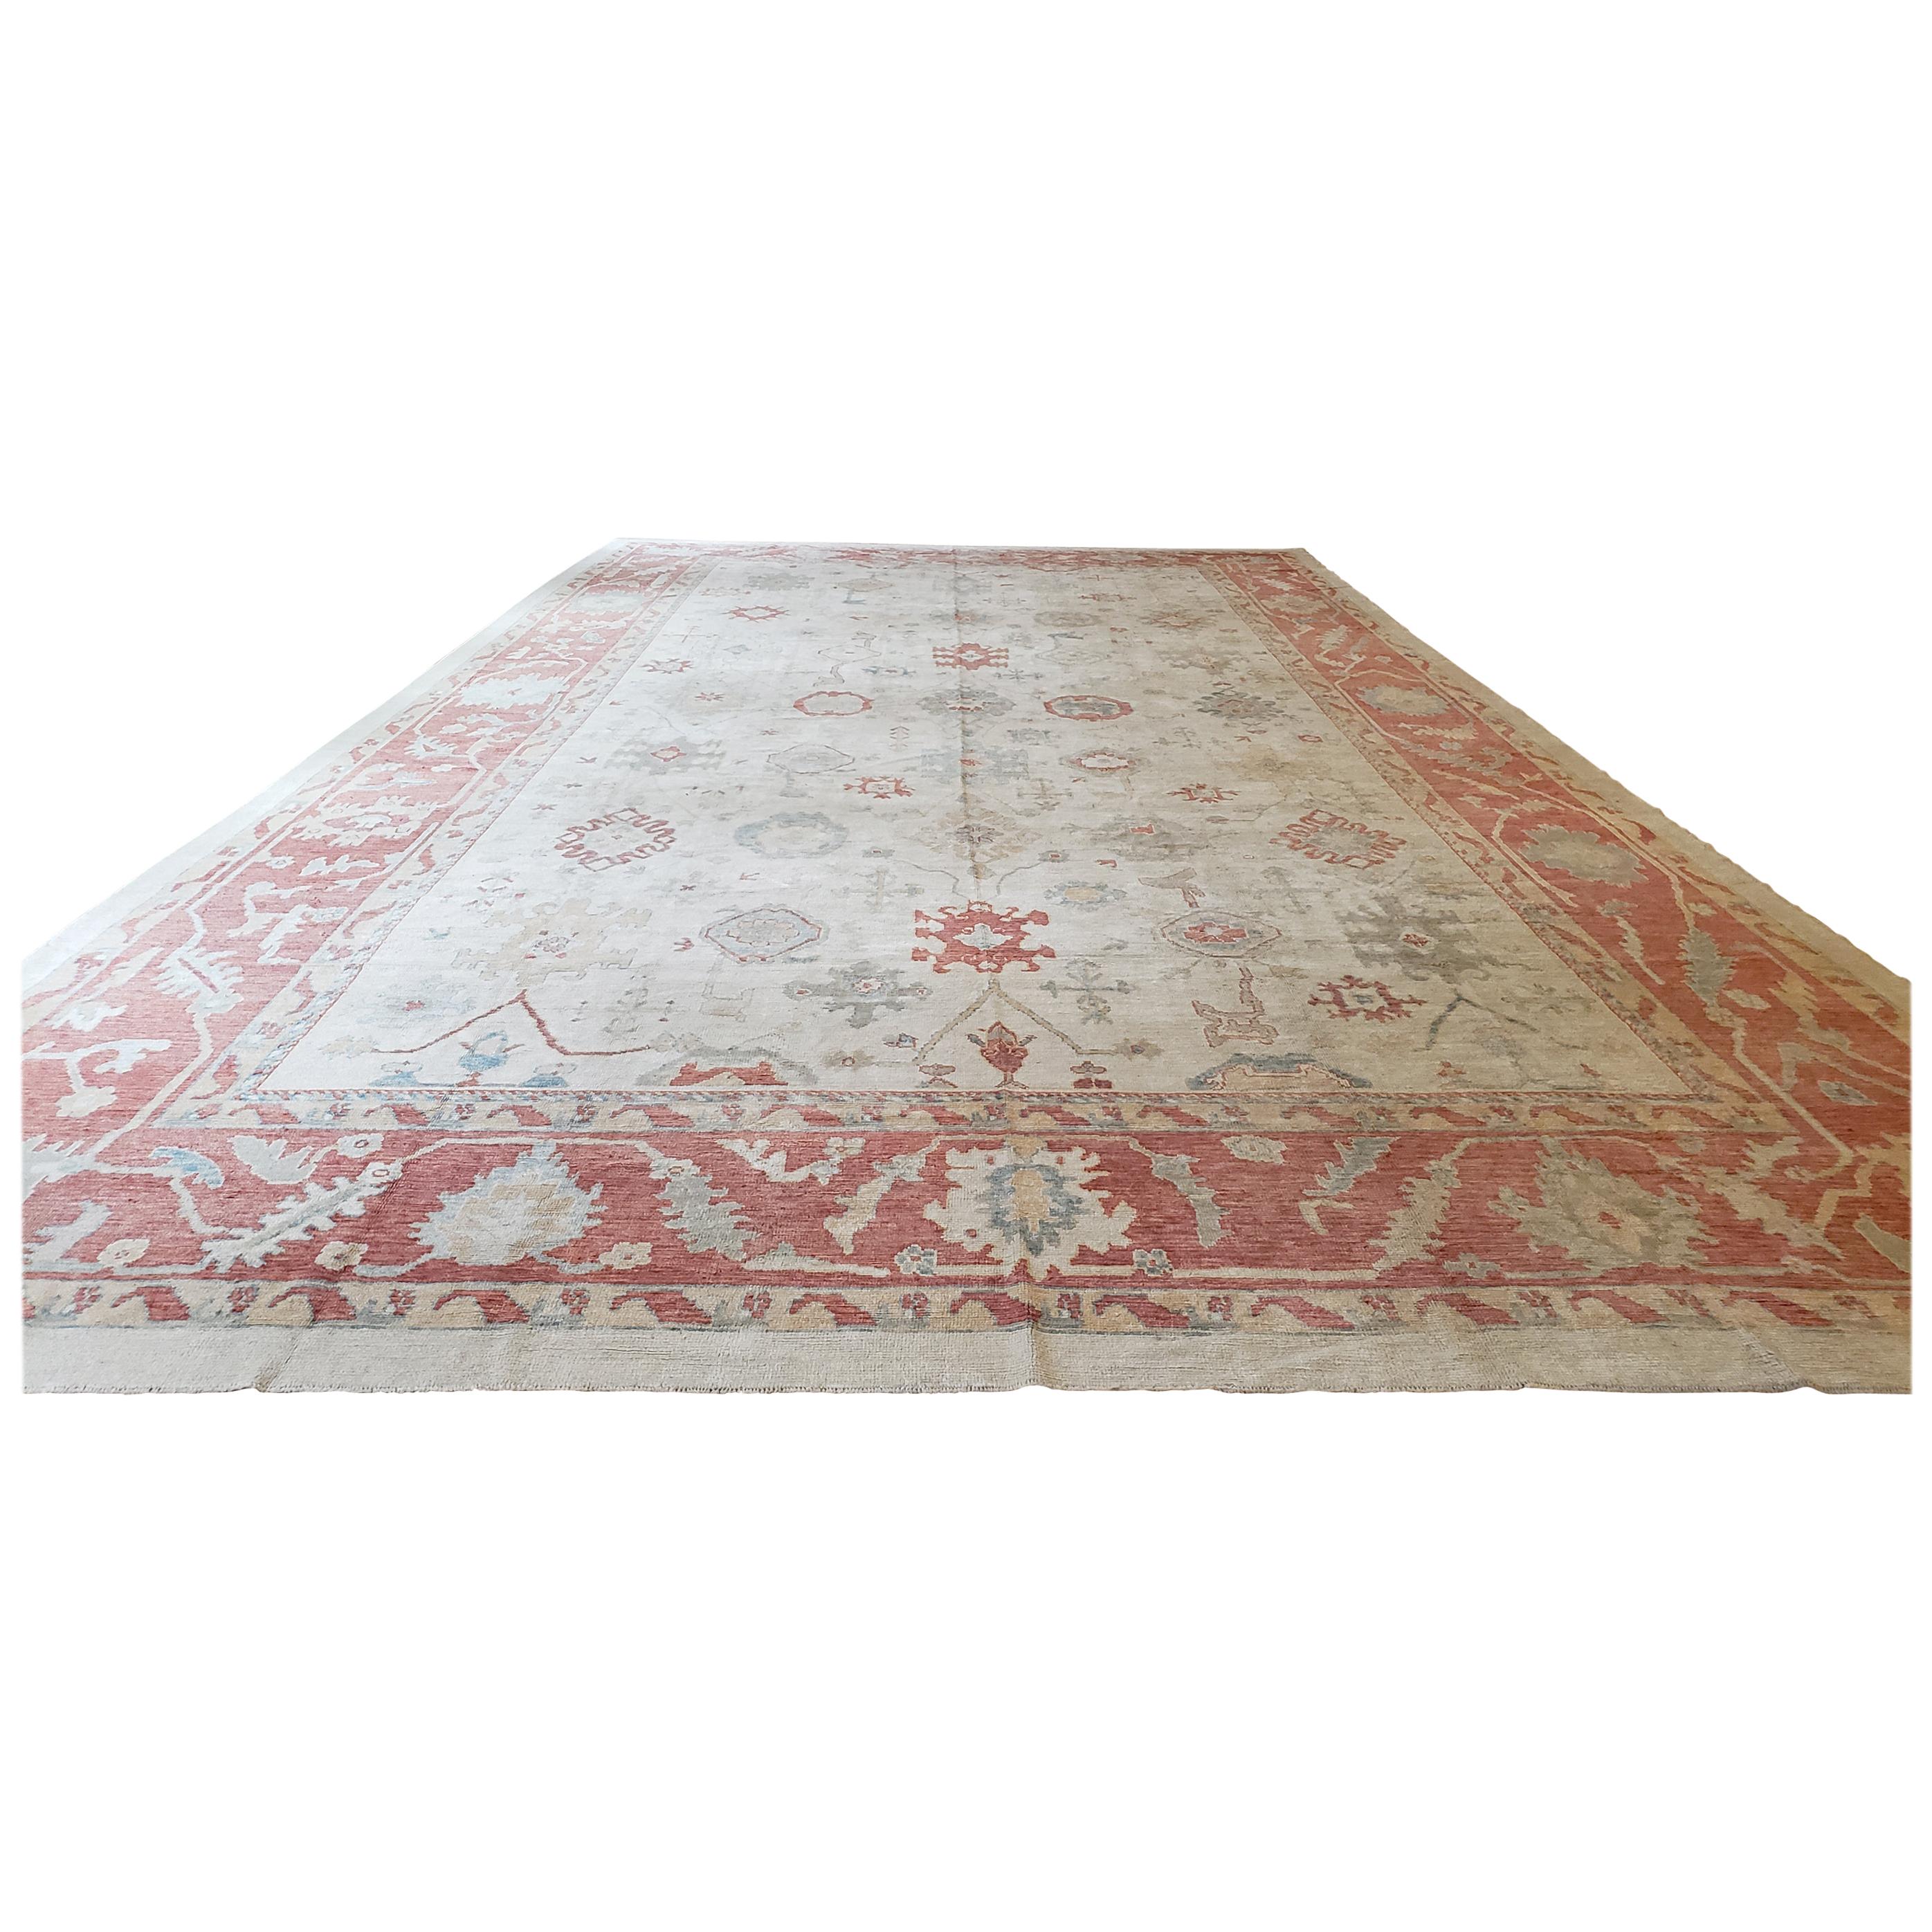 Turkish Oushak Carpet, 1950s, Handmade Oriental Rug, Beige, Taupe, Coral For Sale